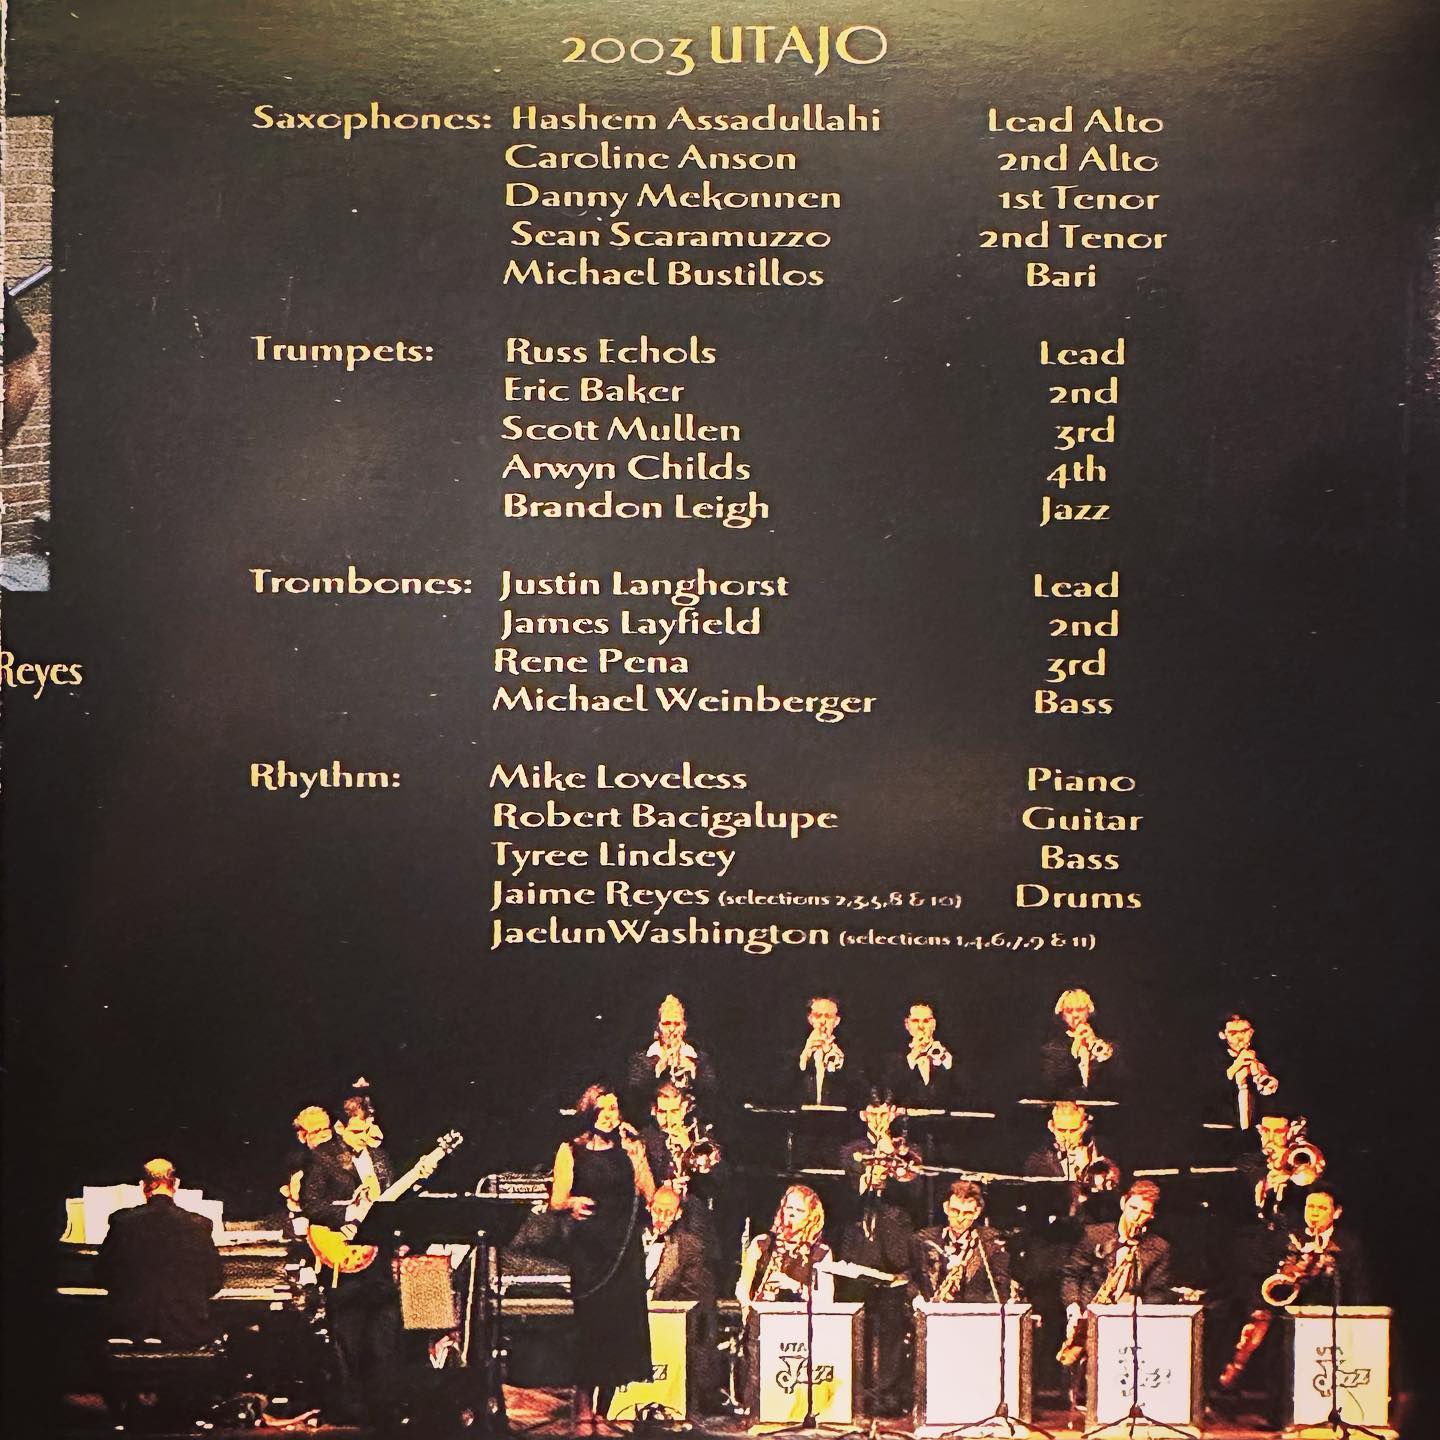 Members of the 2003 UTA Jazz Orchestra